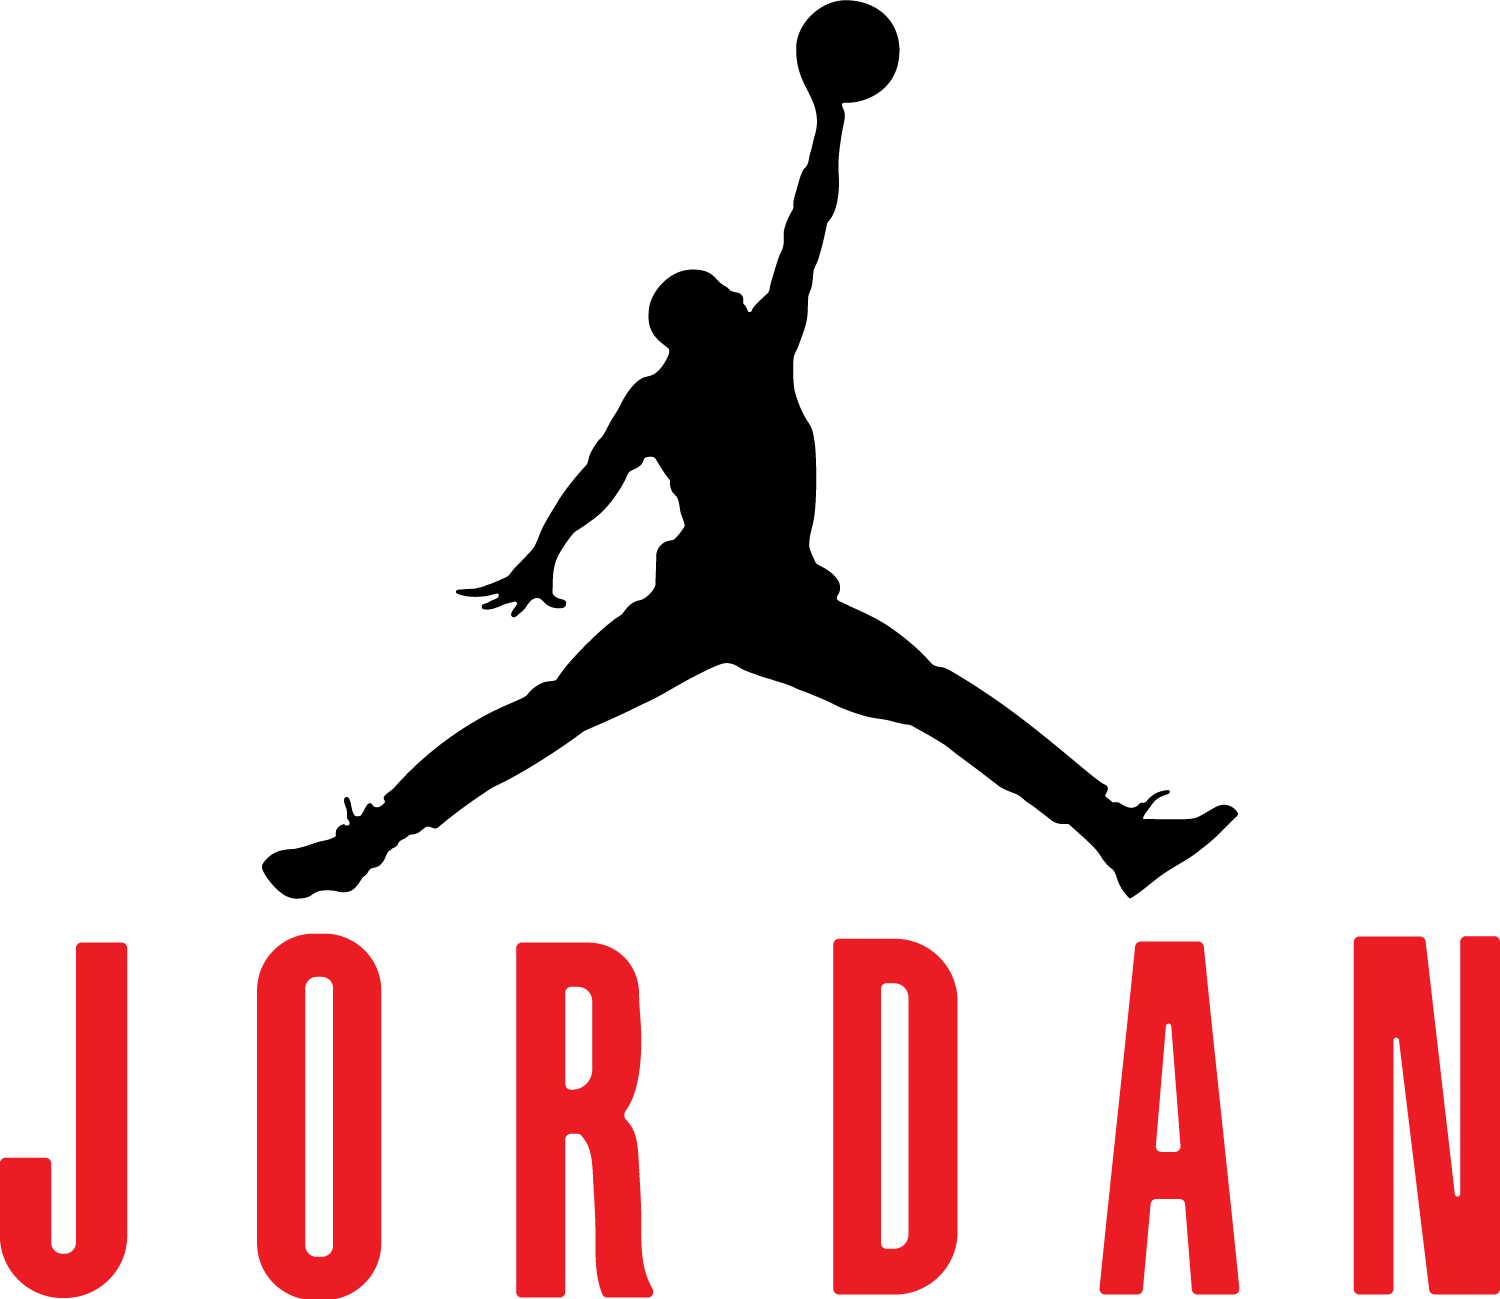 jordan logo with name